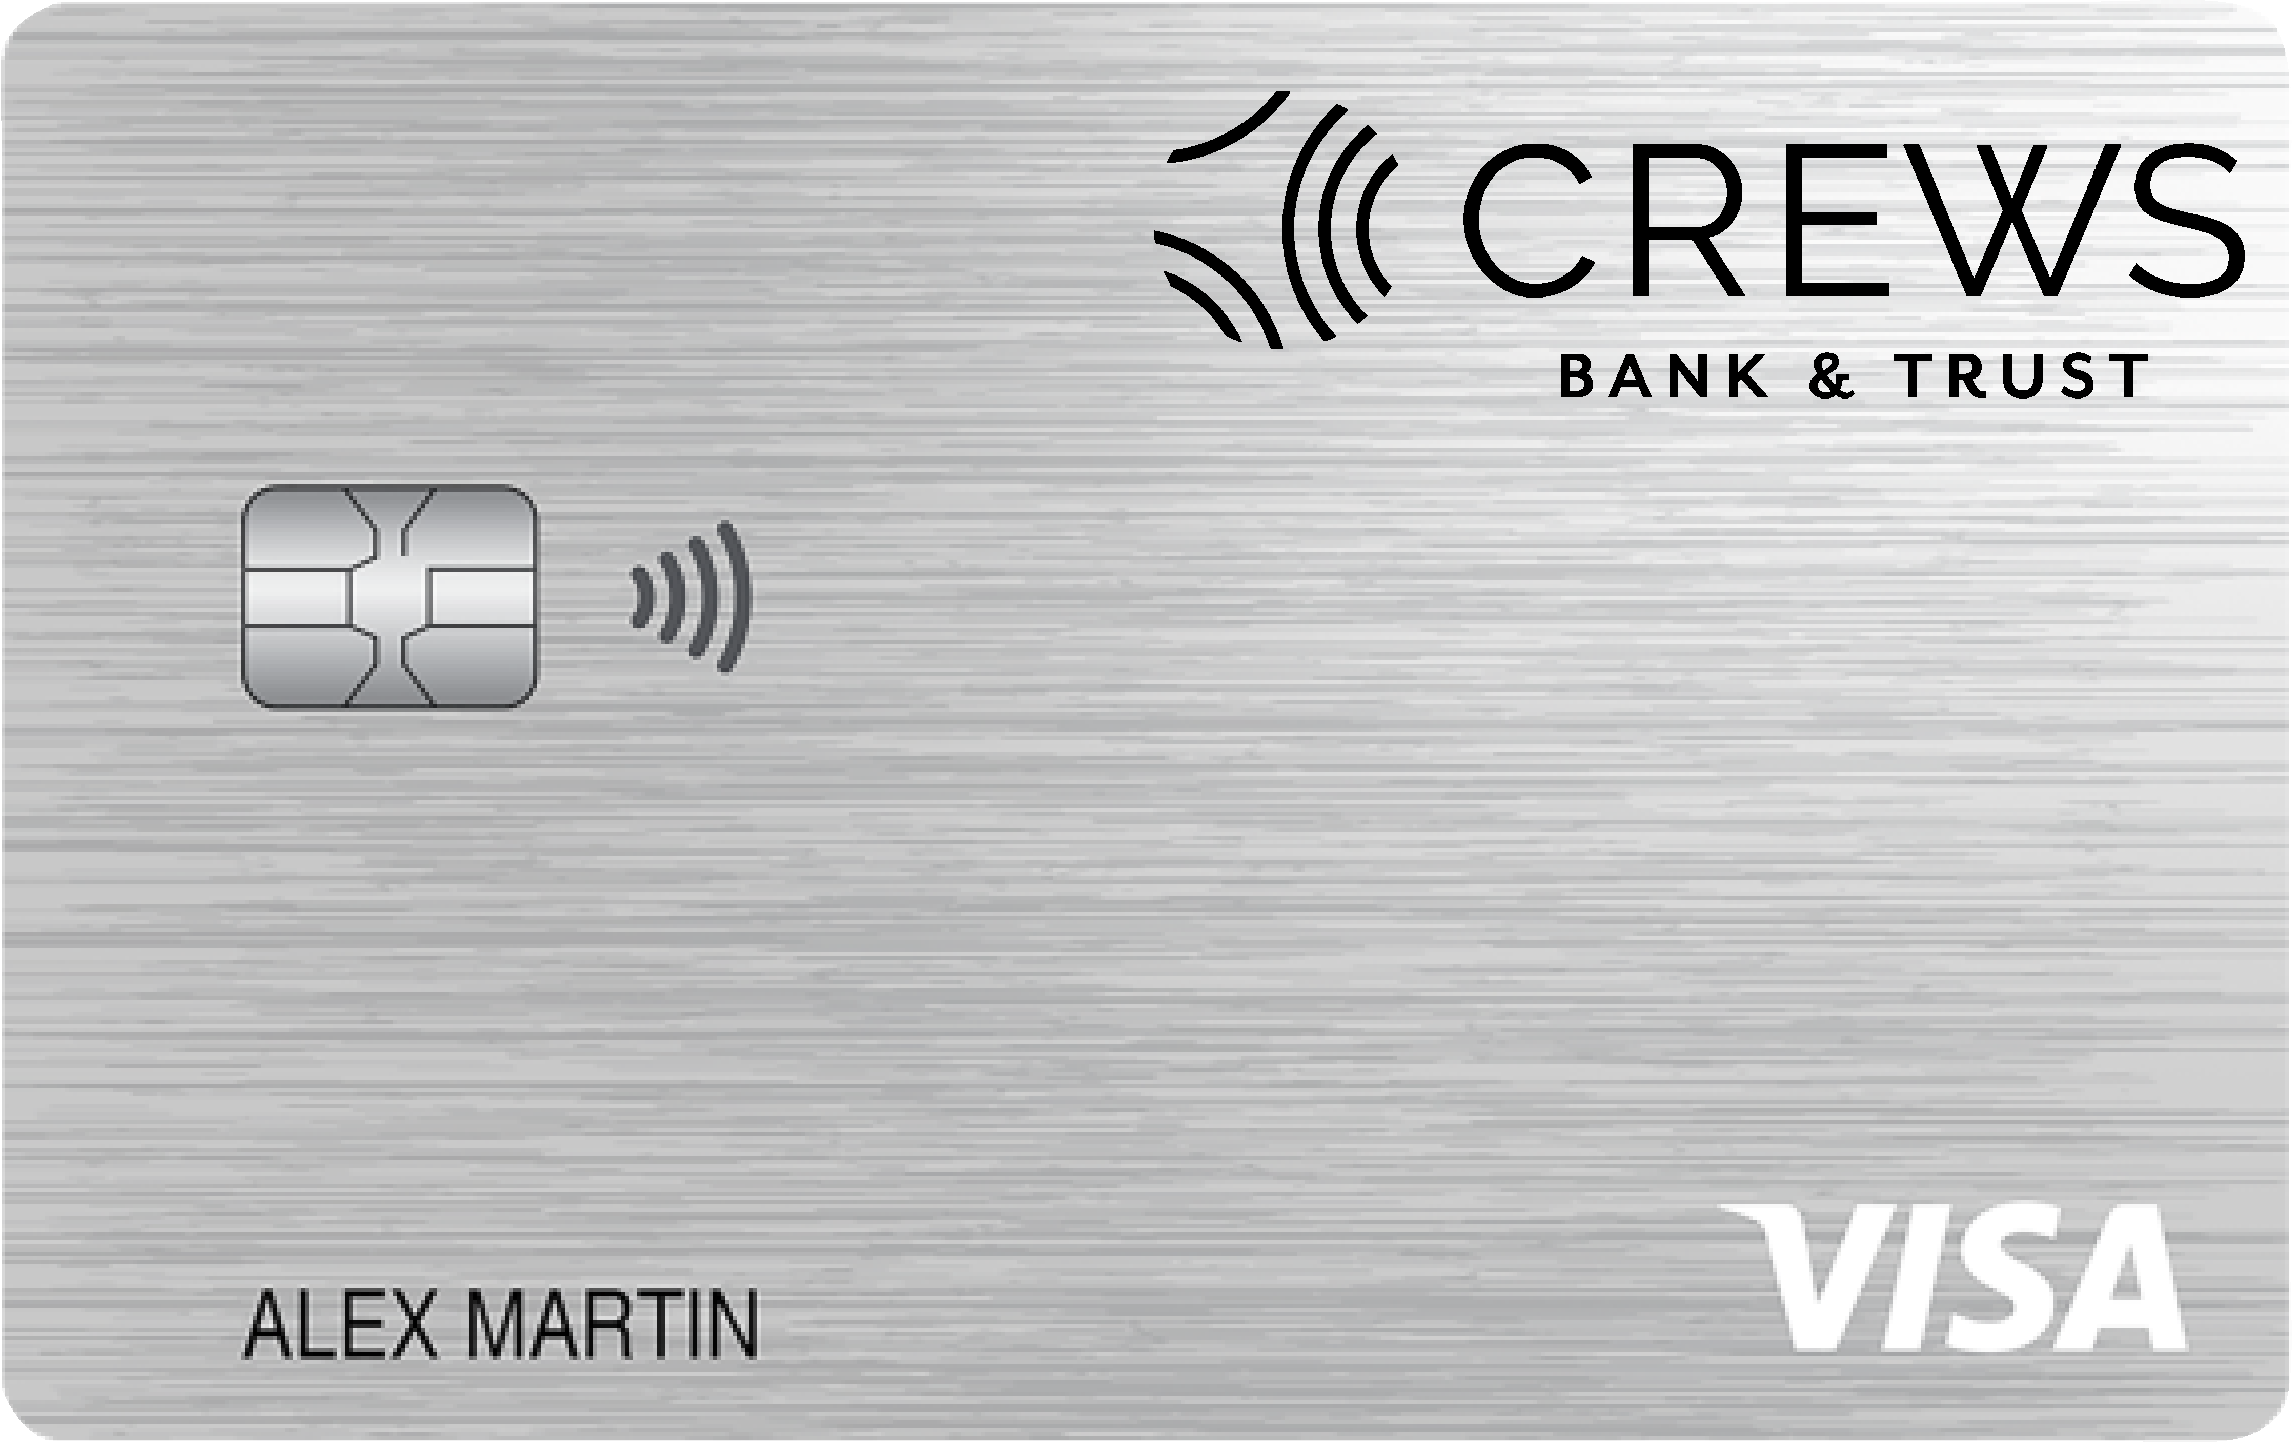 Crews Bank & Trust Secured Card